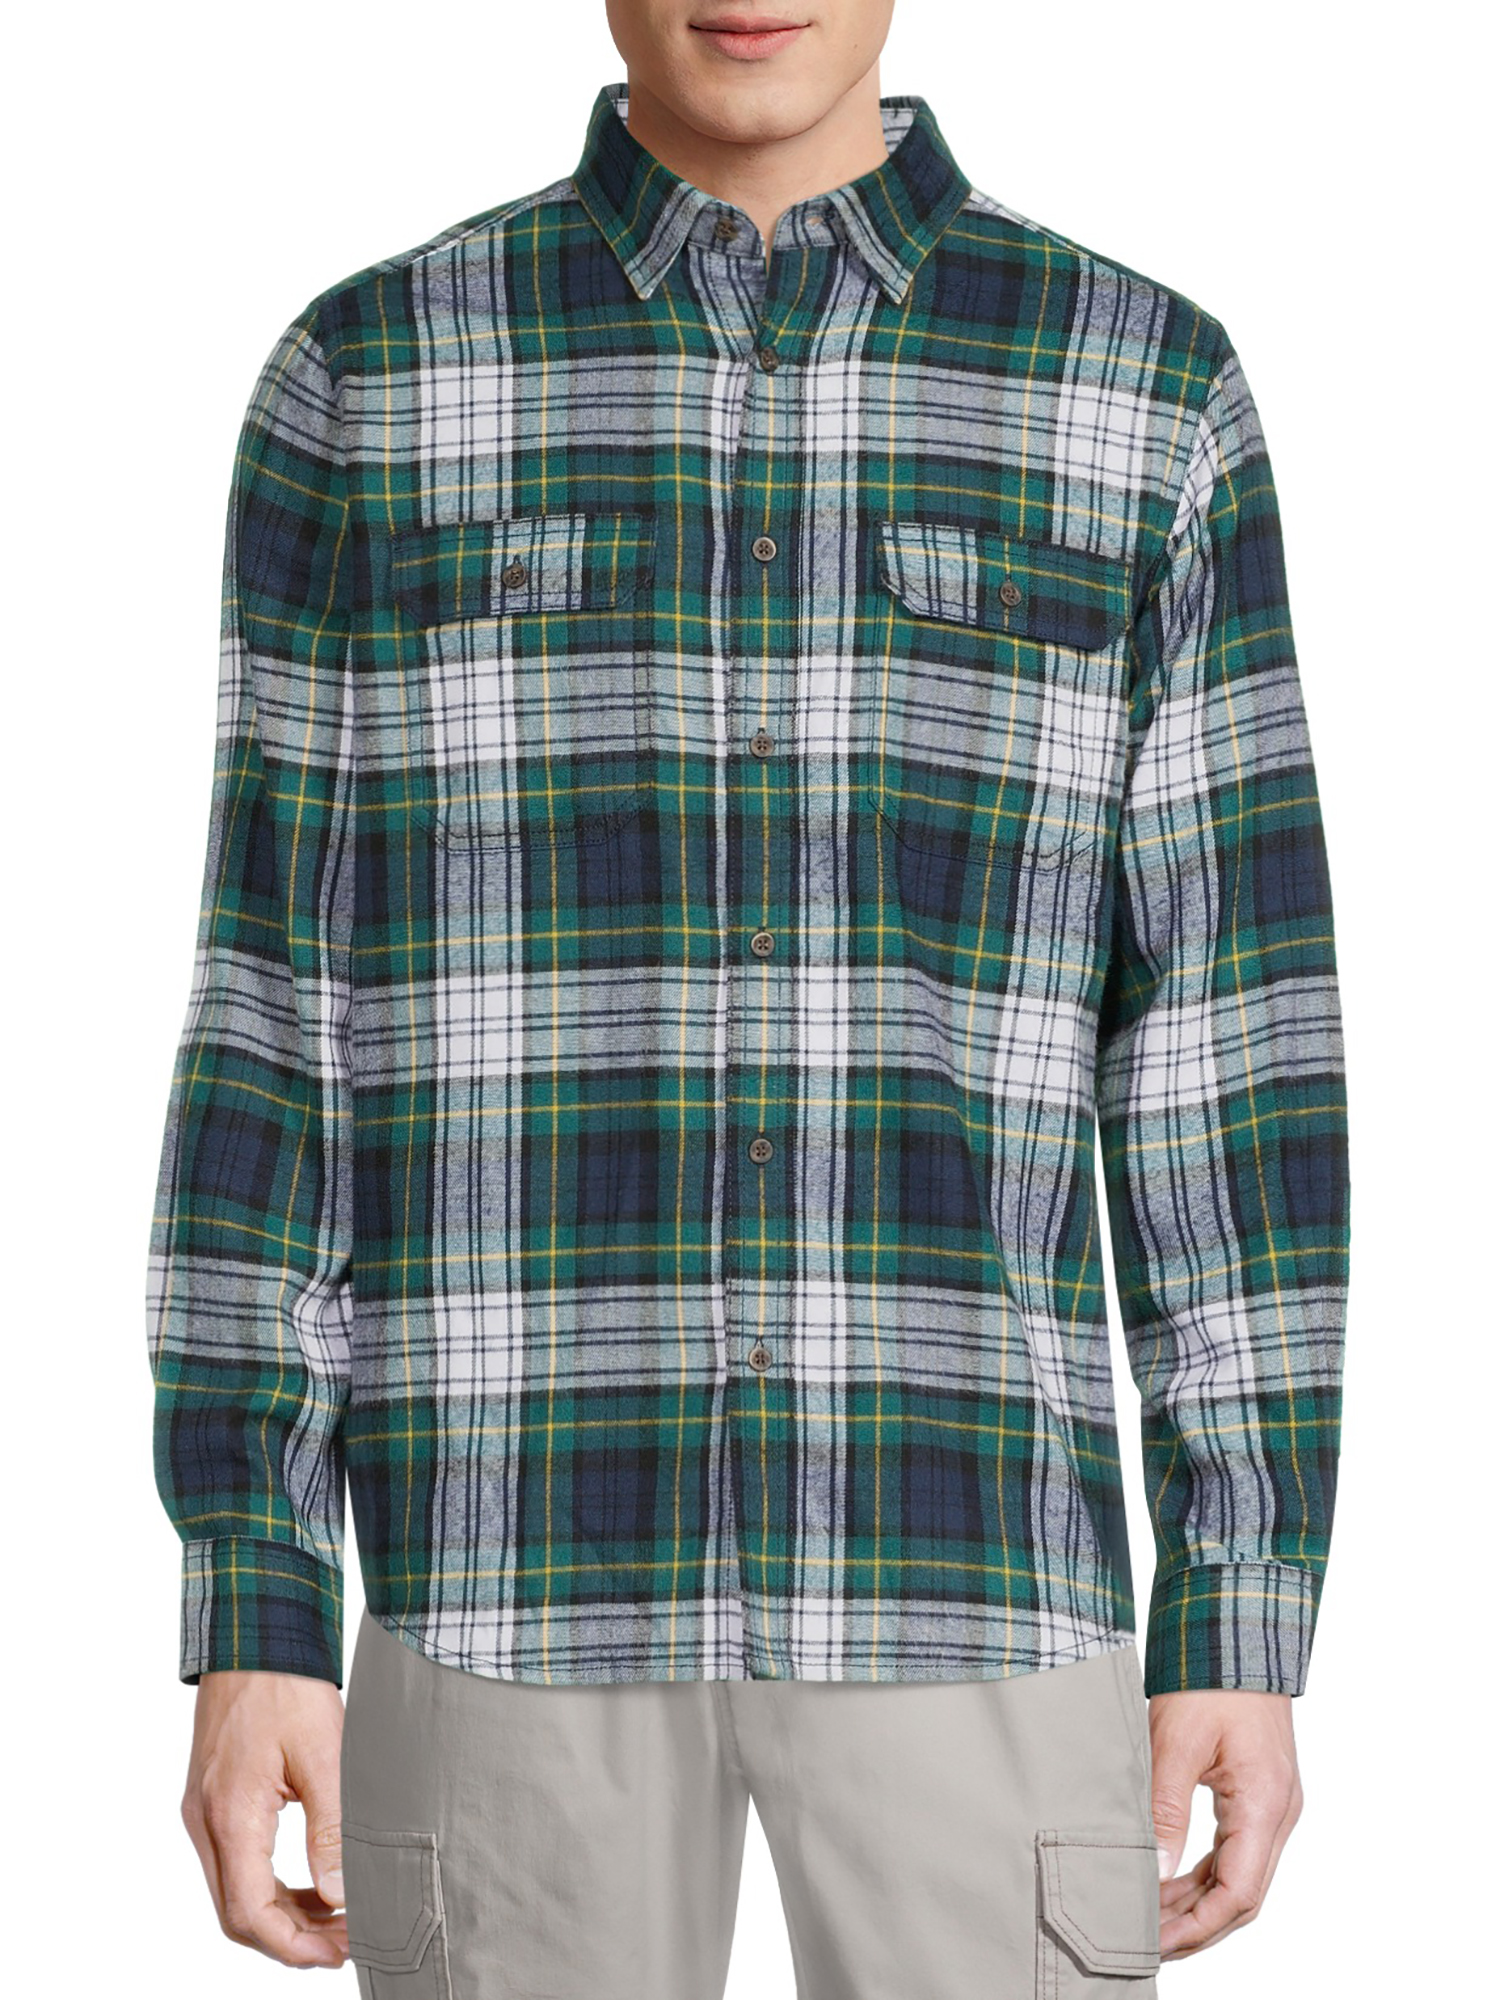 George Men's and Big Men's Super Soft Flannel Shirt, up to 5XLT - image 1 of 5